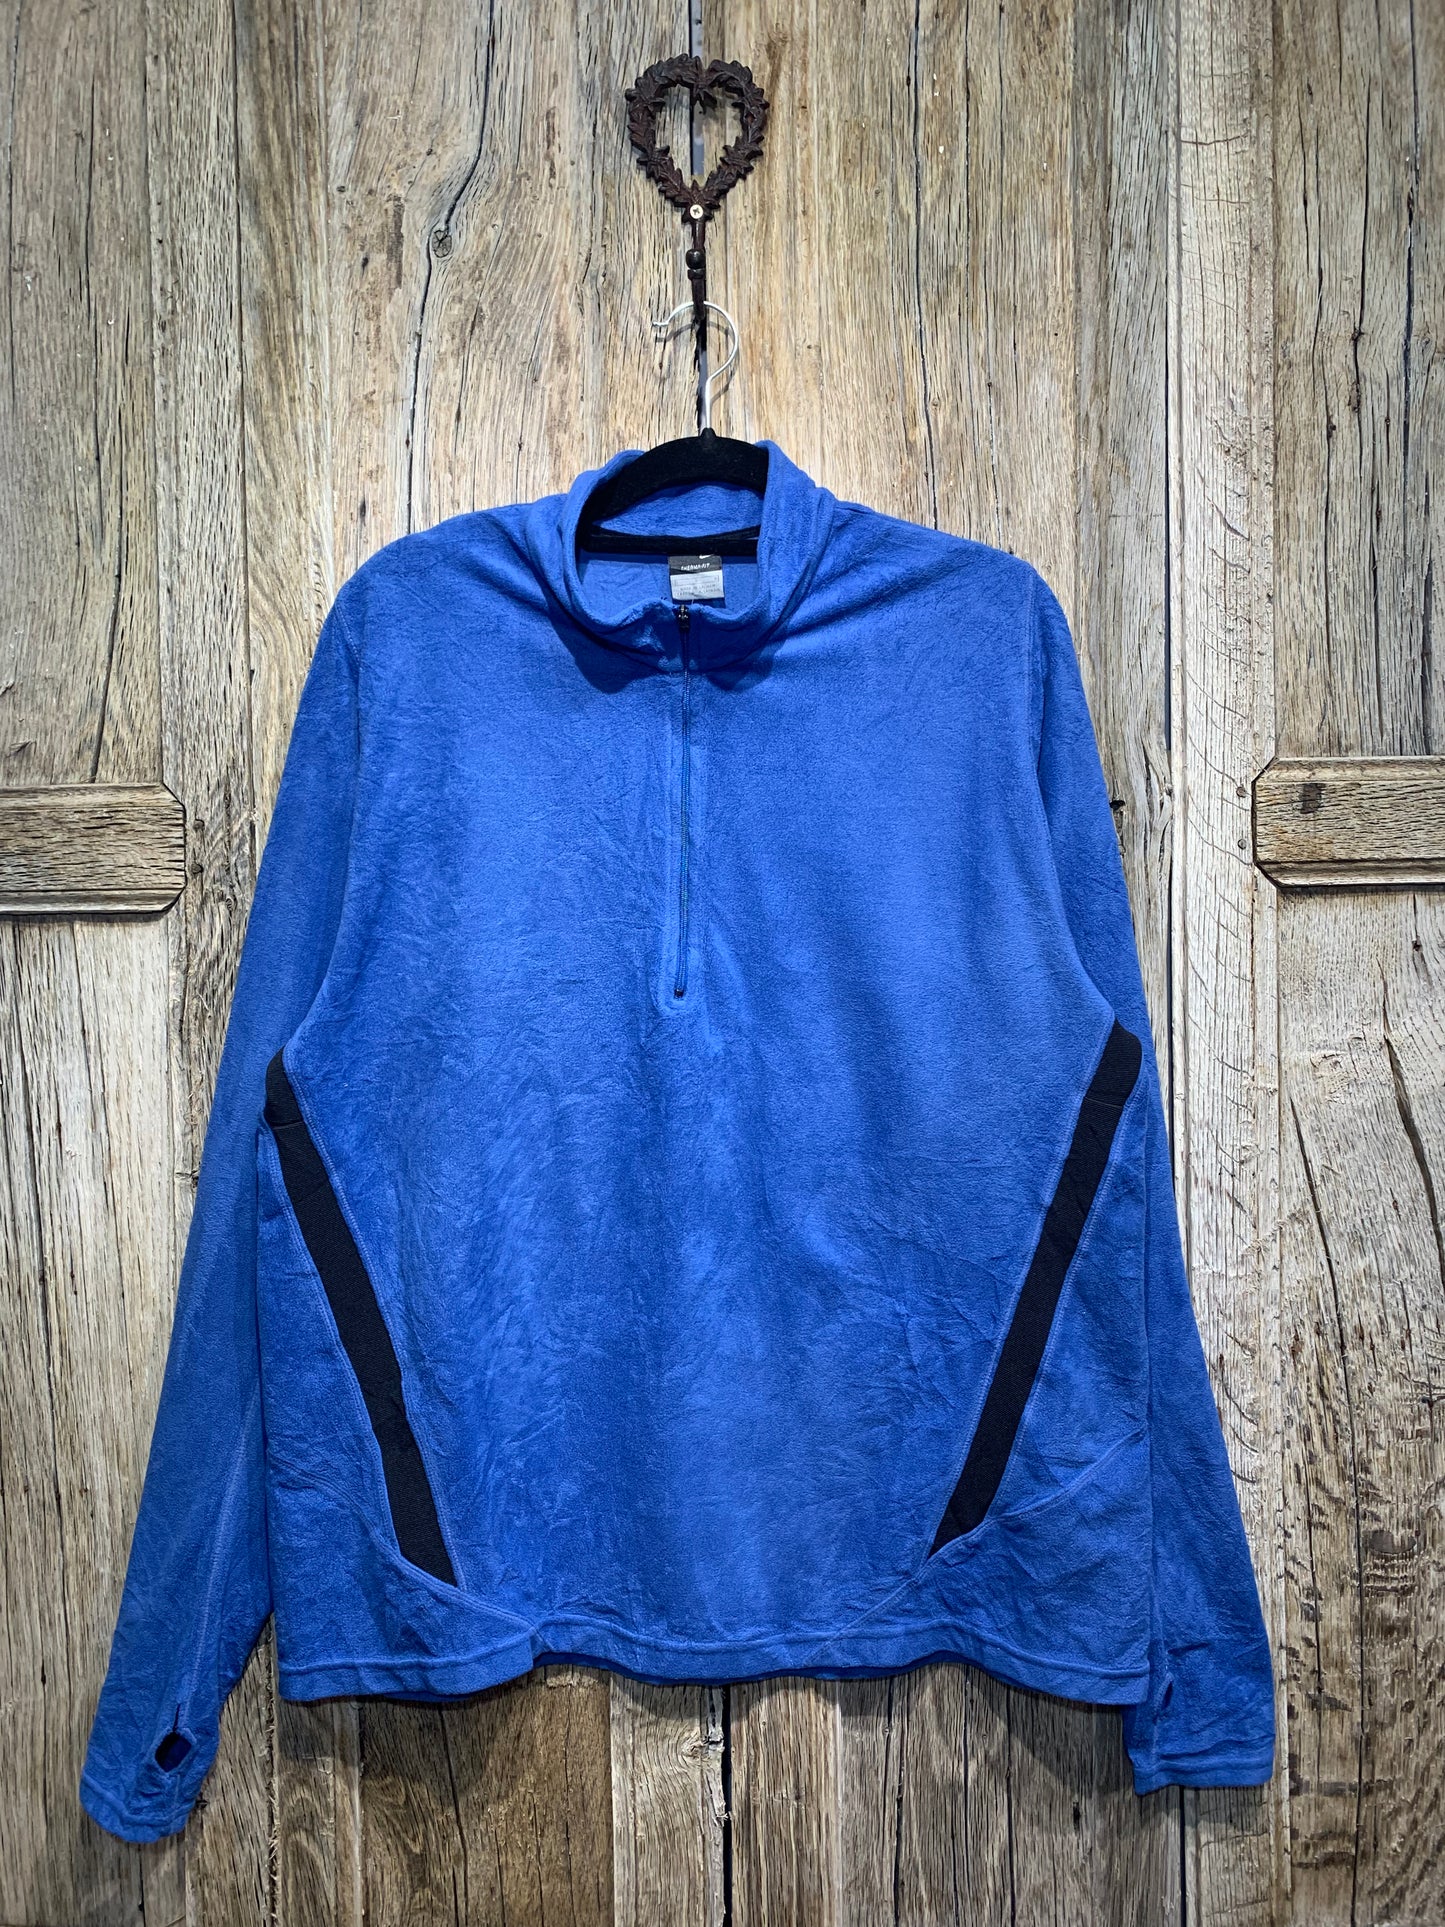 Vintage Nike Blue 1/4 Zip Fleece